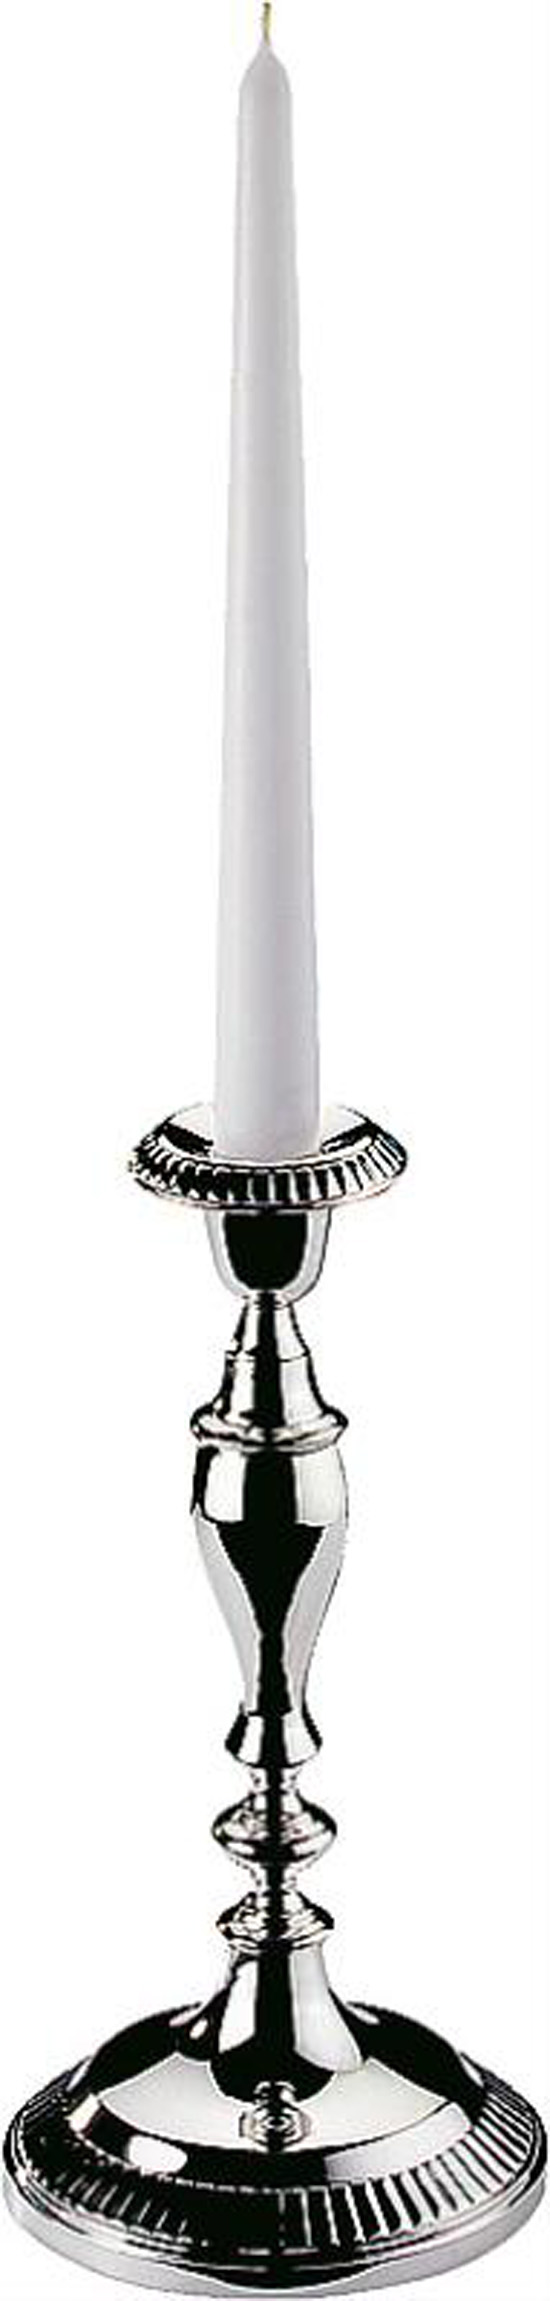 185-51351 Candleholder - silver plated - Ø11 cm , height 22 cm